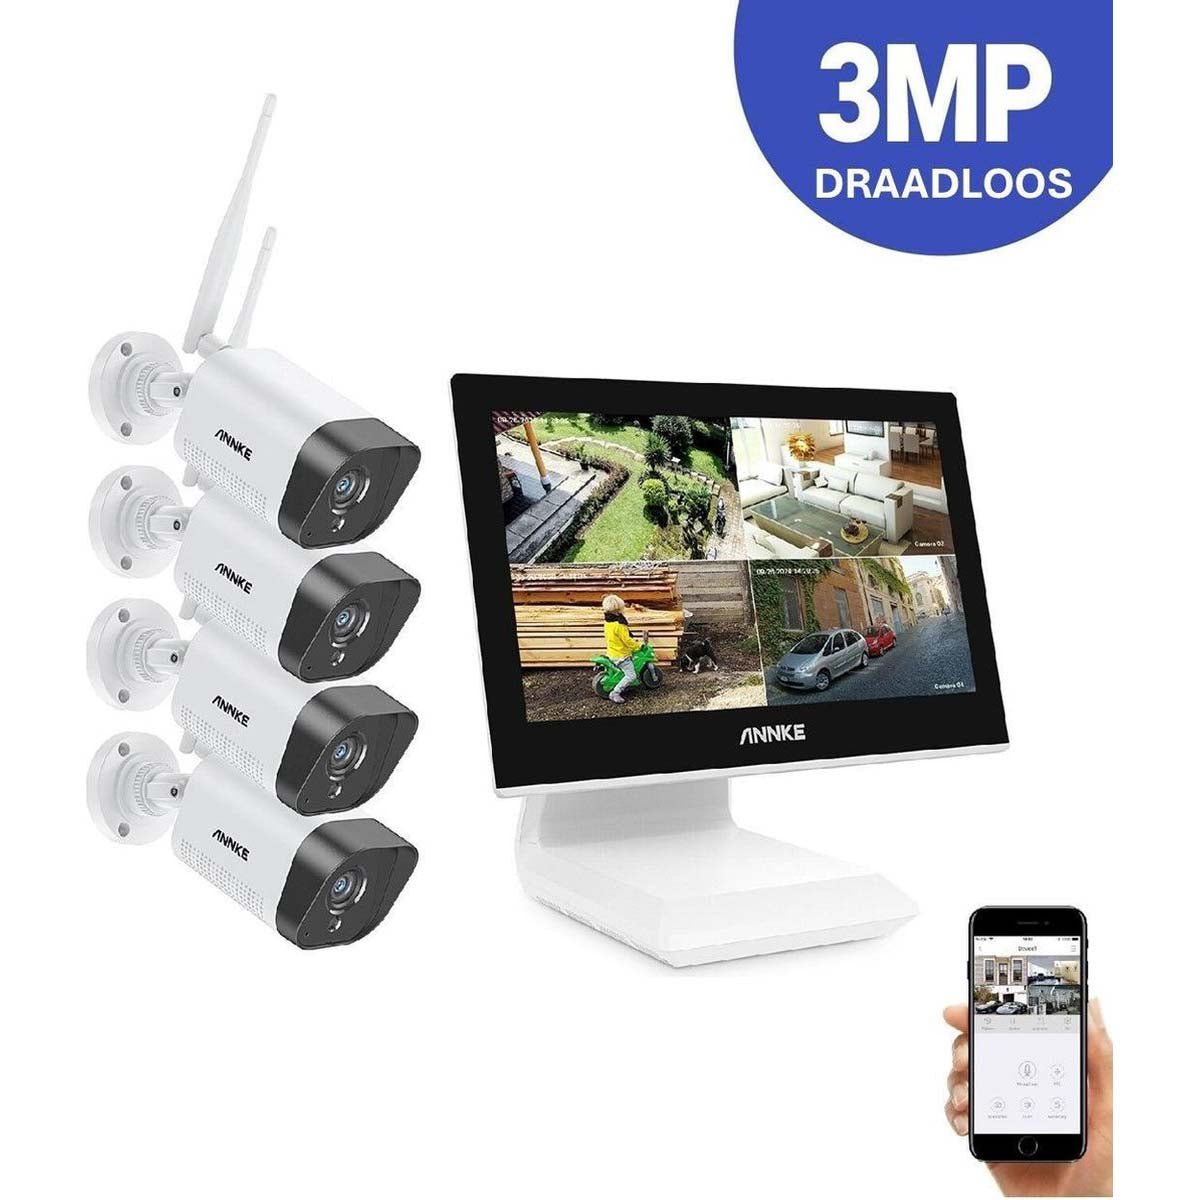 <tc>Ariko</tc> Annke Wireless 3MP camera security system 10 inch monitor 2TB HD/live internet - 4 wireless cameras - Plug and play